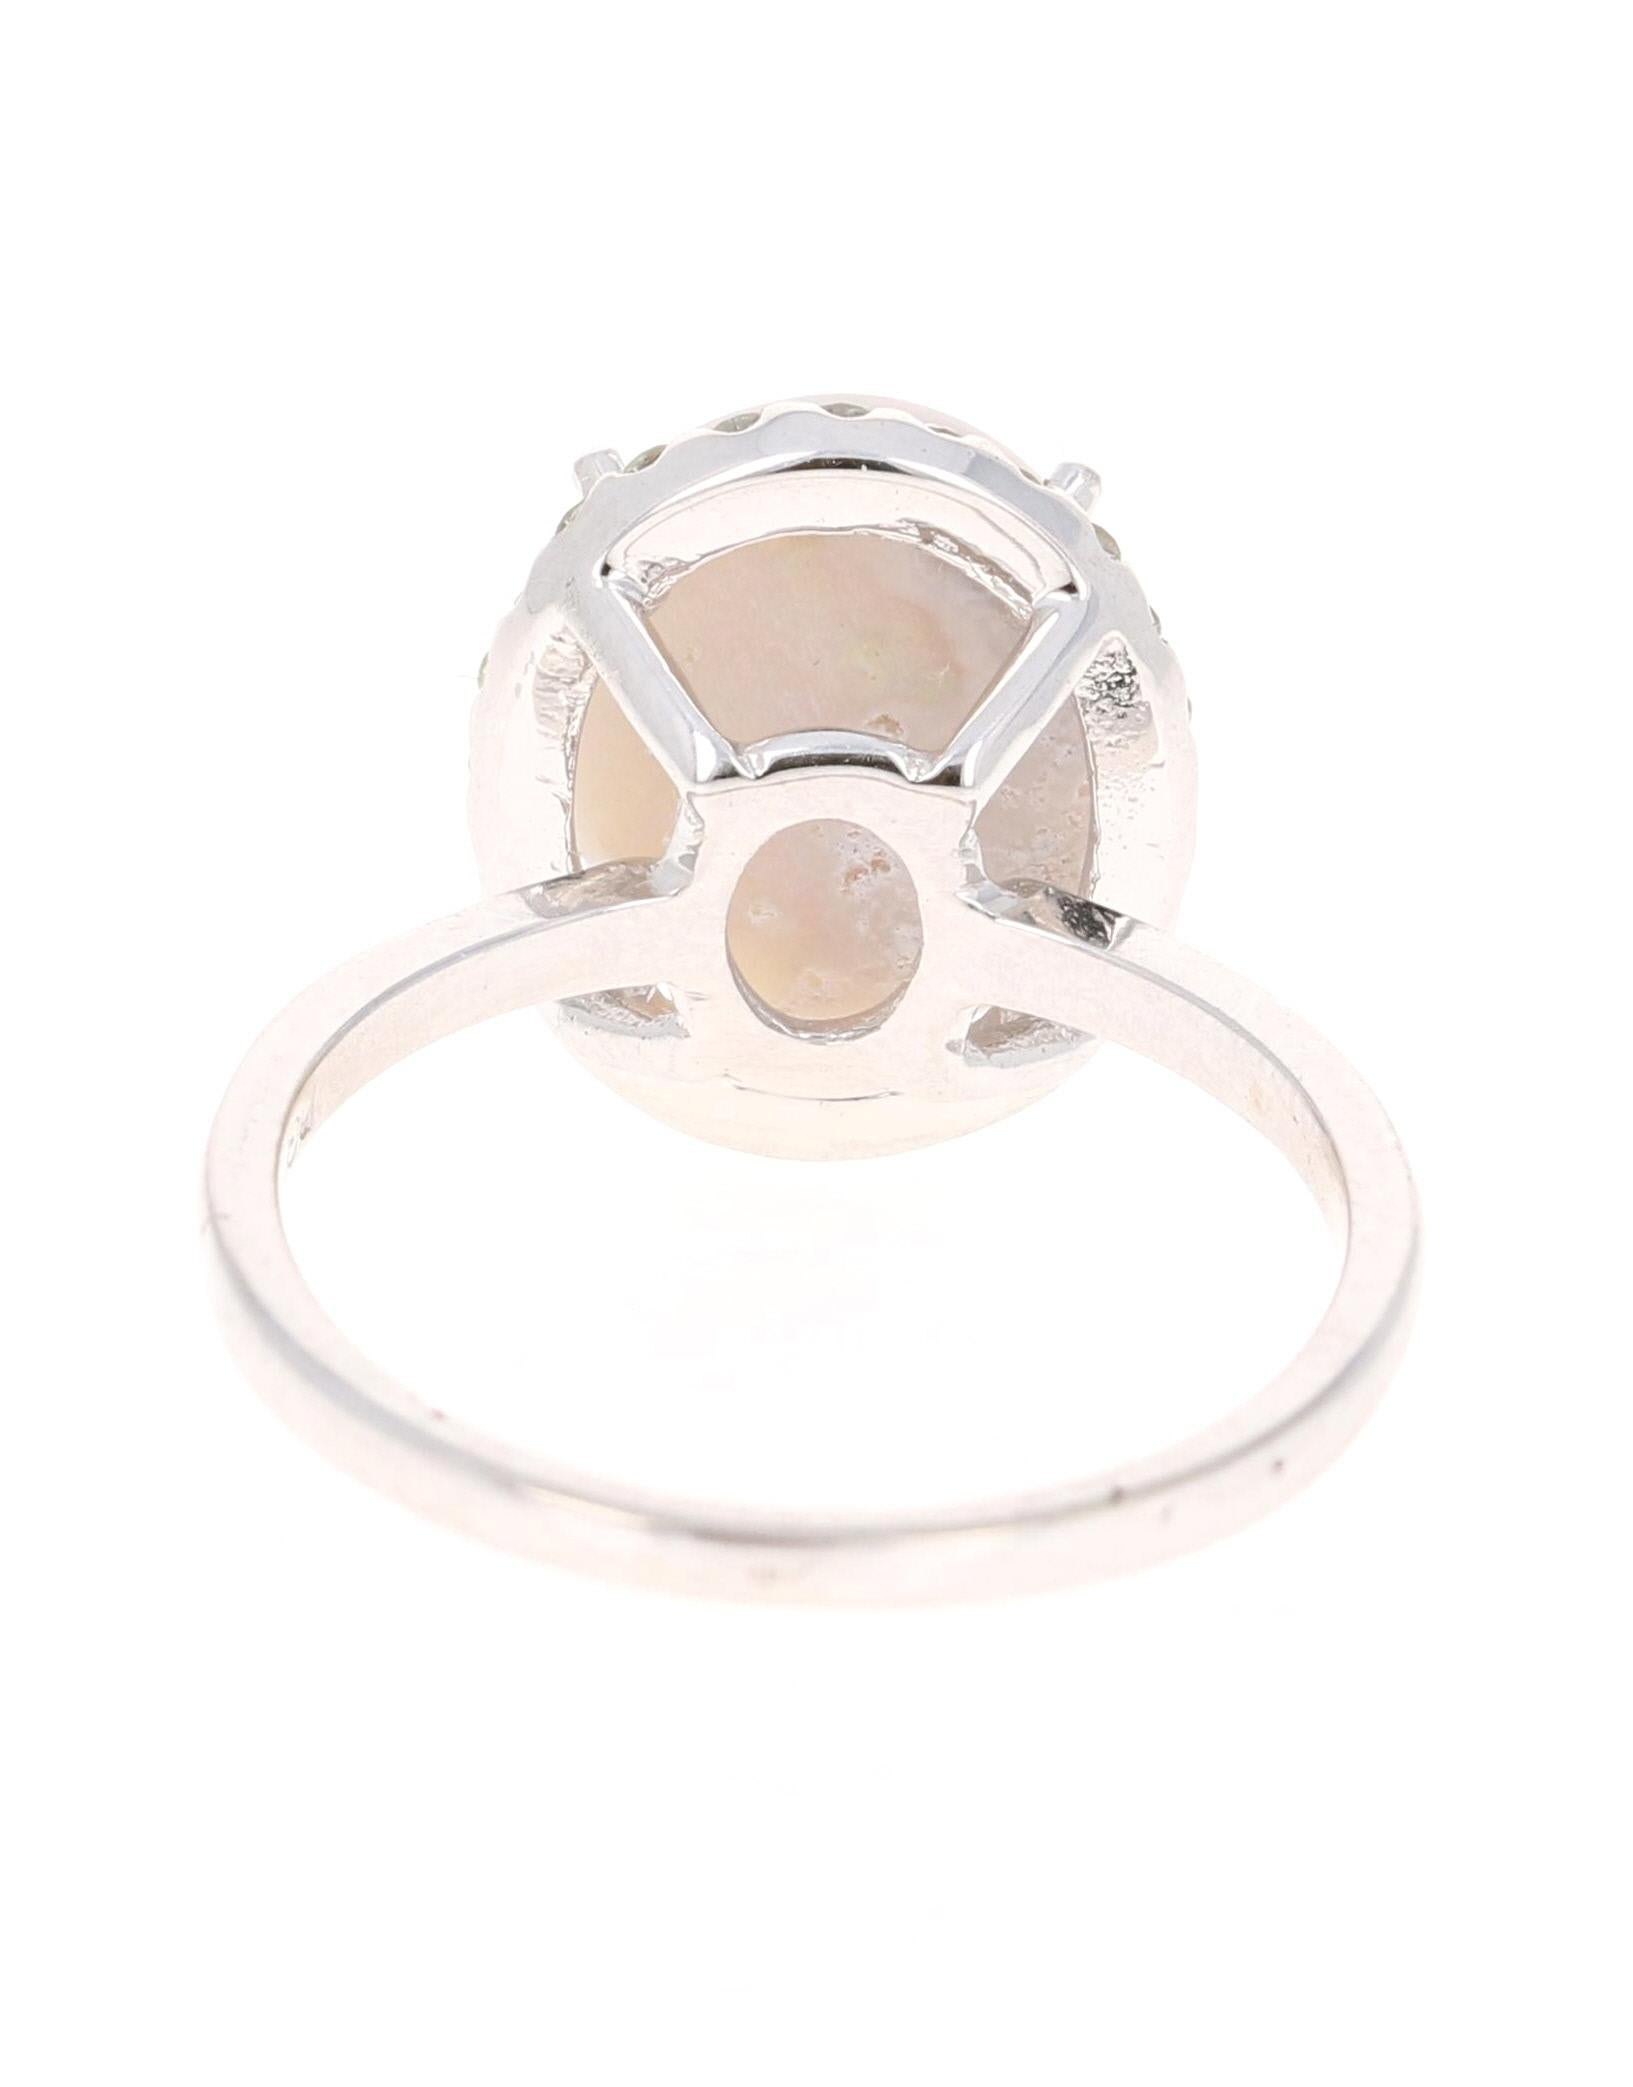 Oval Cut 2.63 Carat Opal Diamond 14 Karat White Gold Ring